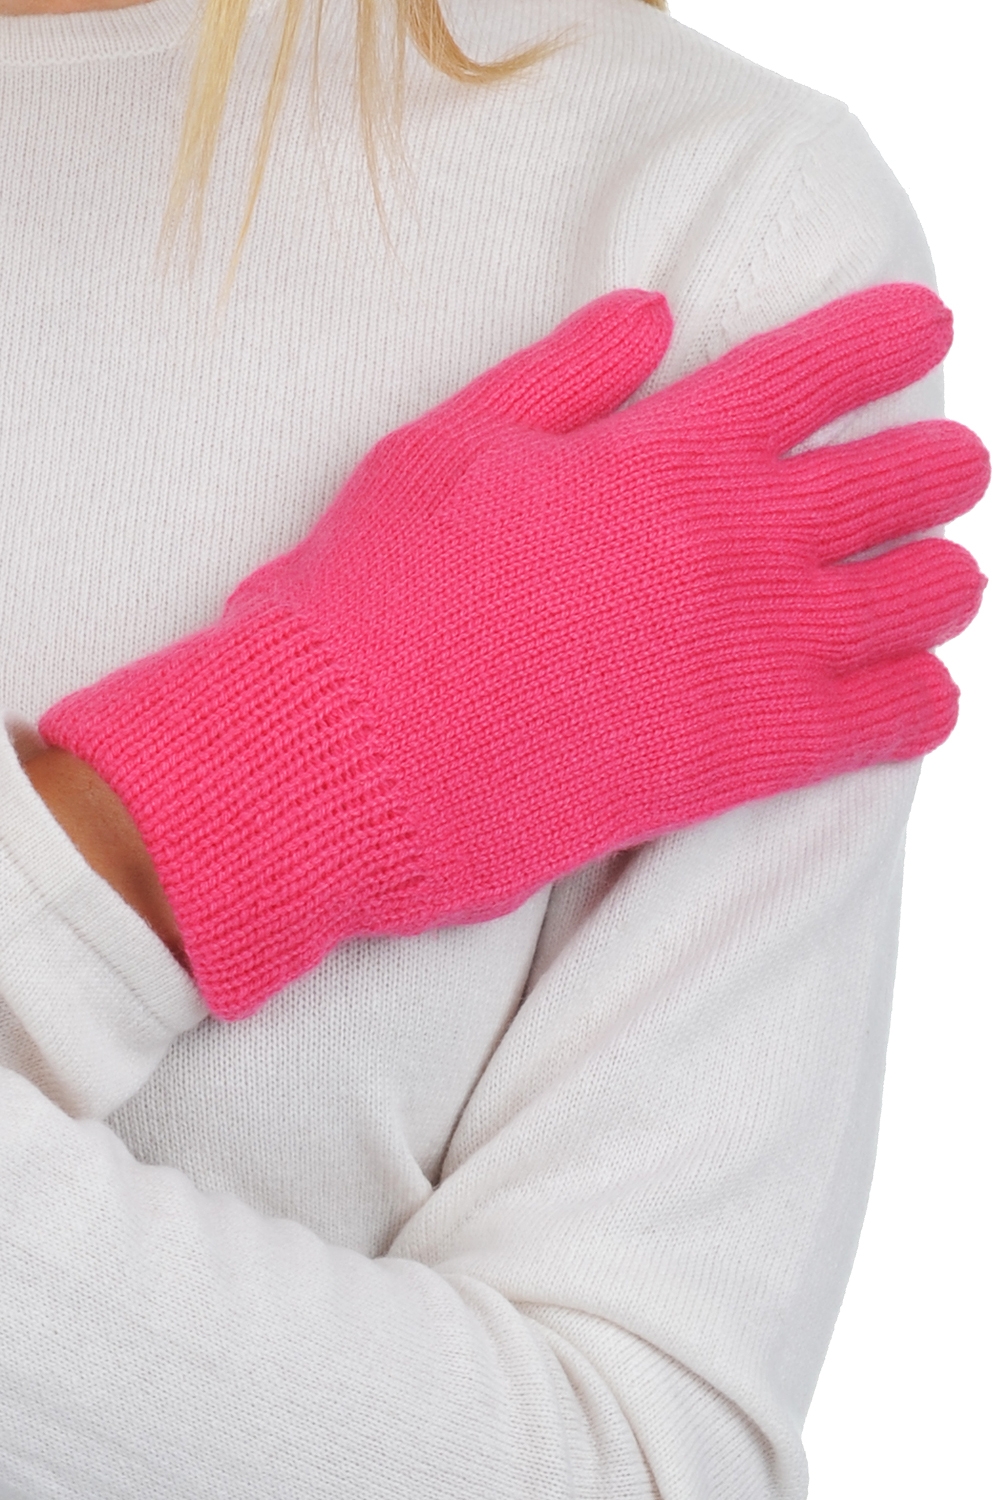 Cashmere accessoires kaschmir handschuhe manine rose shocking 22 x 13 cm